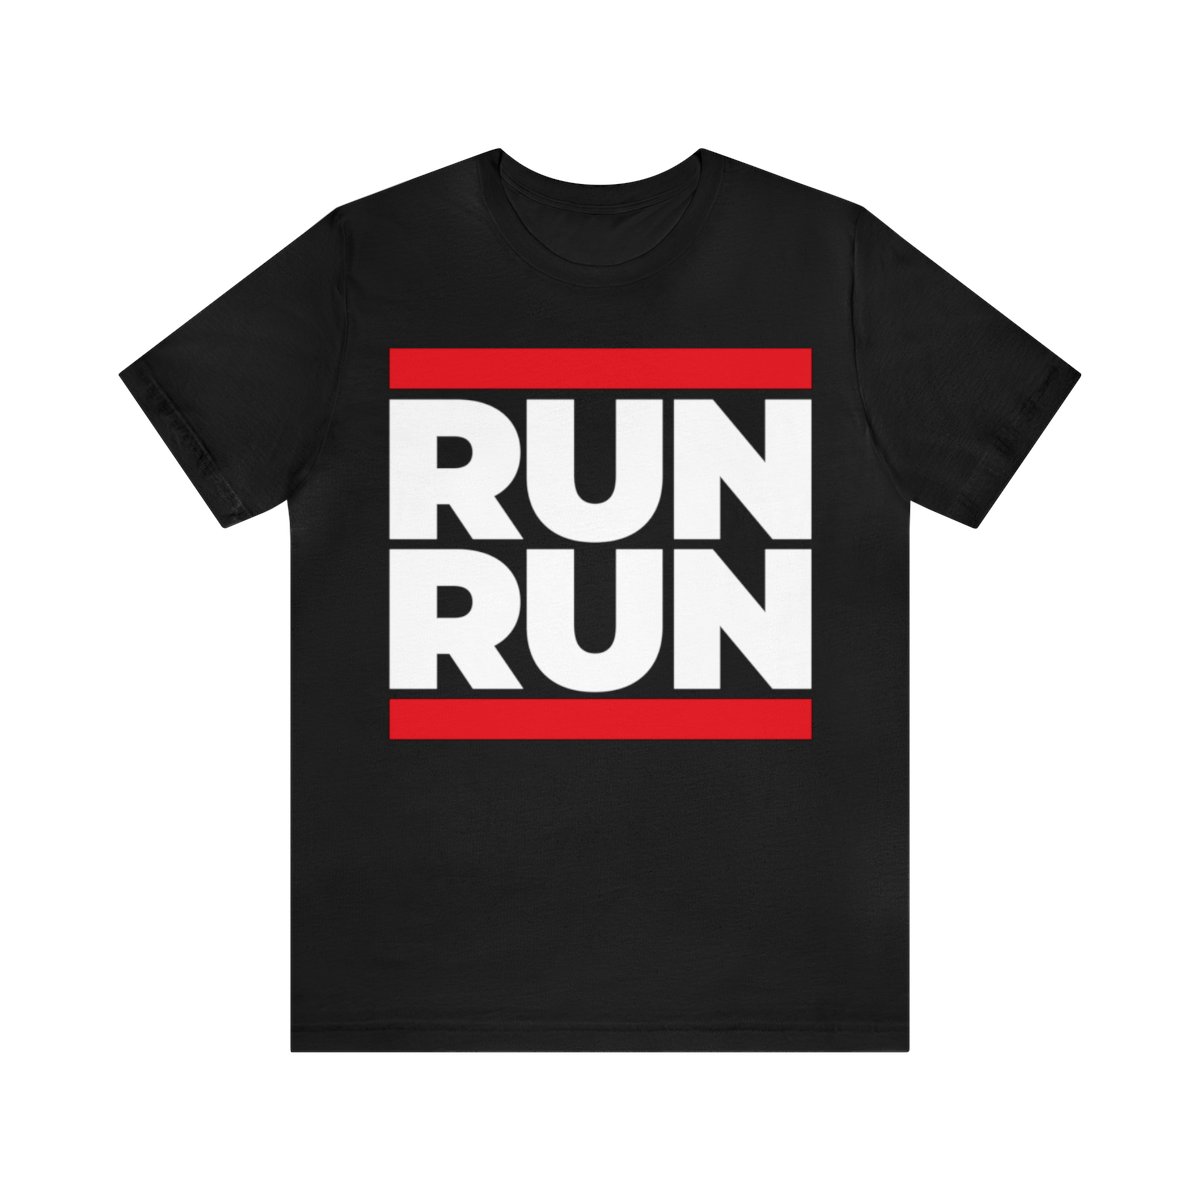 Run Runner Marathon Shirt